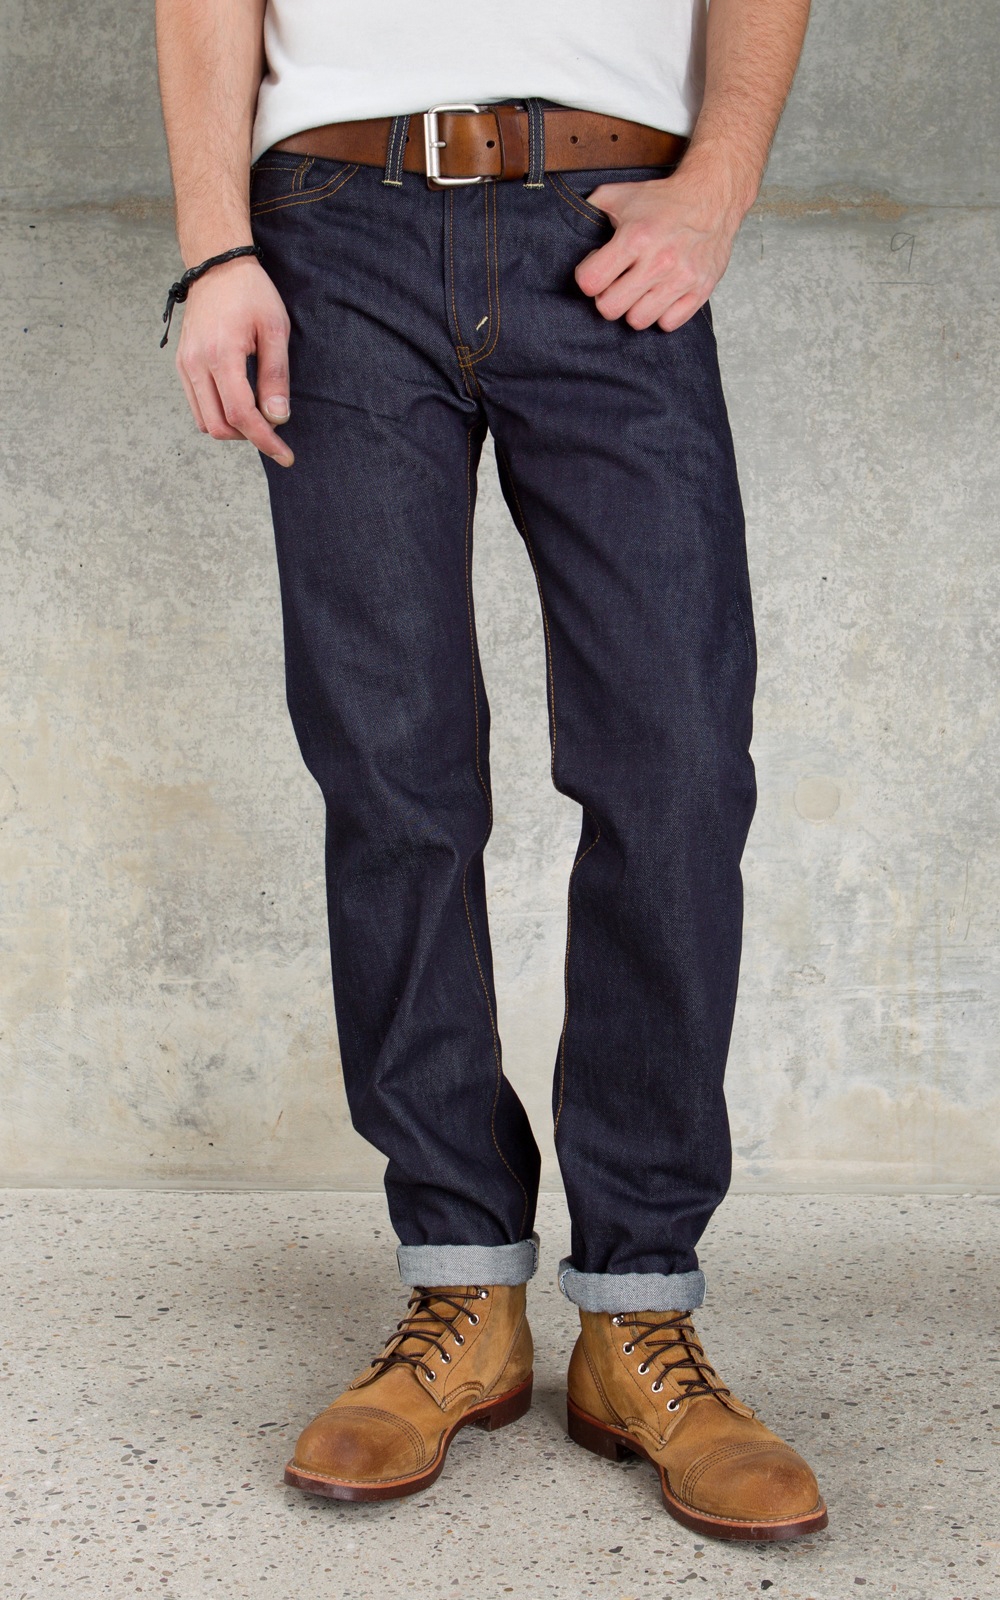 CARI KASUT: Levi's Vintage Clothing 1954 501Z Rigid Jeans